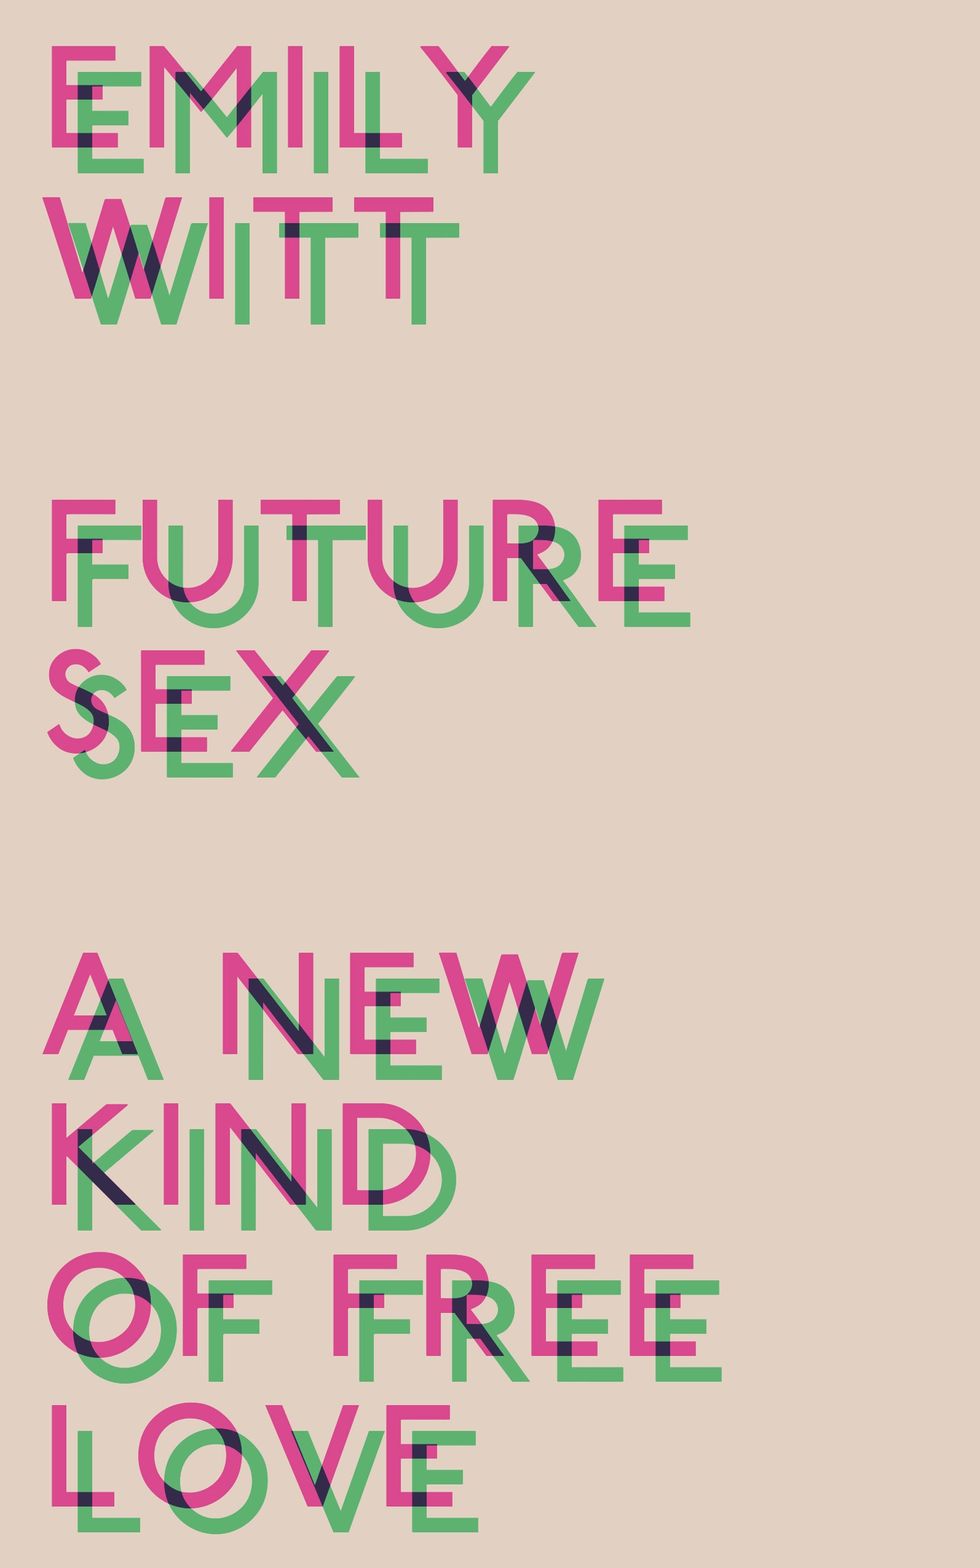 Emily Witt's Future Sex